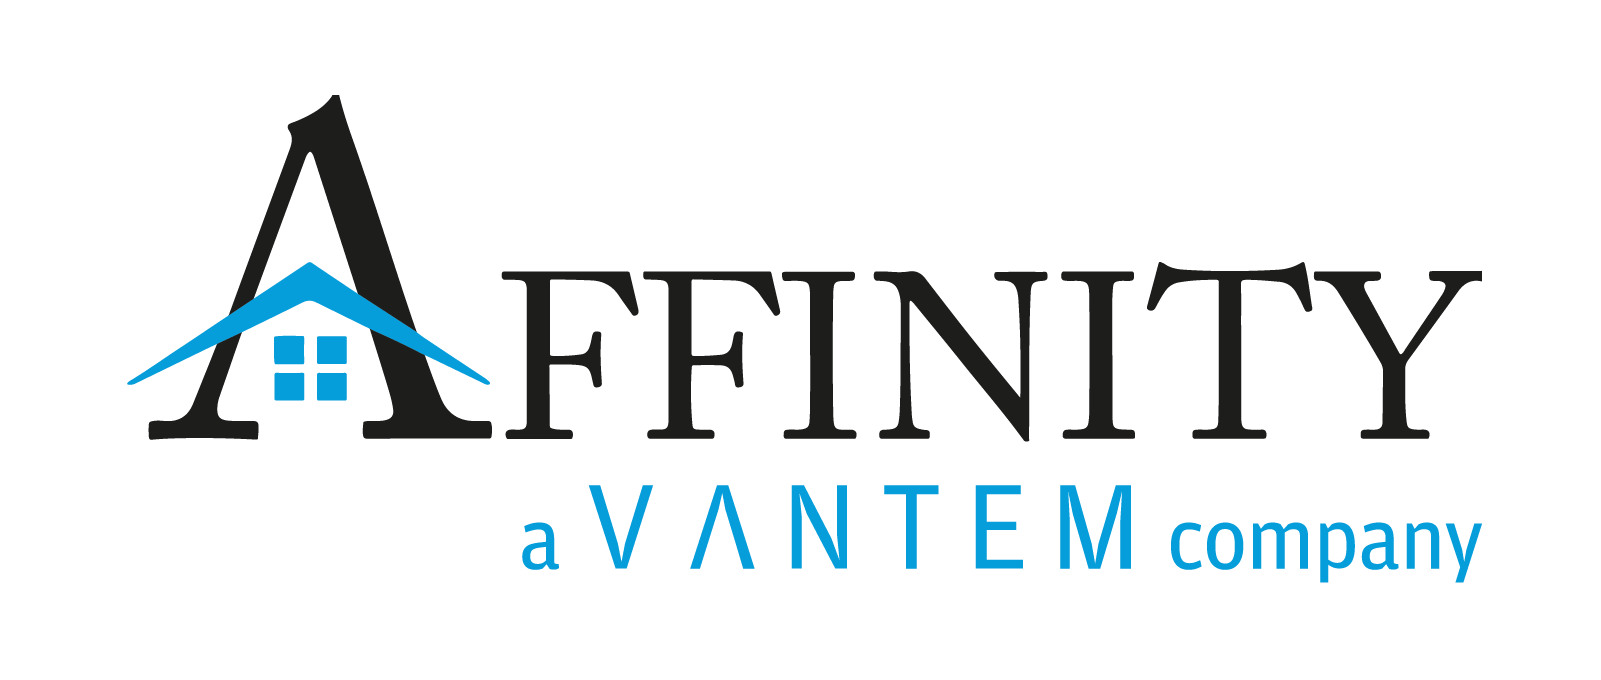 Affinity Modular company logo